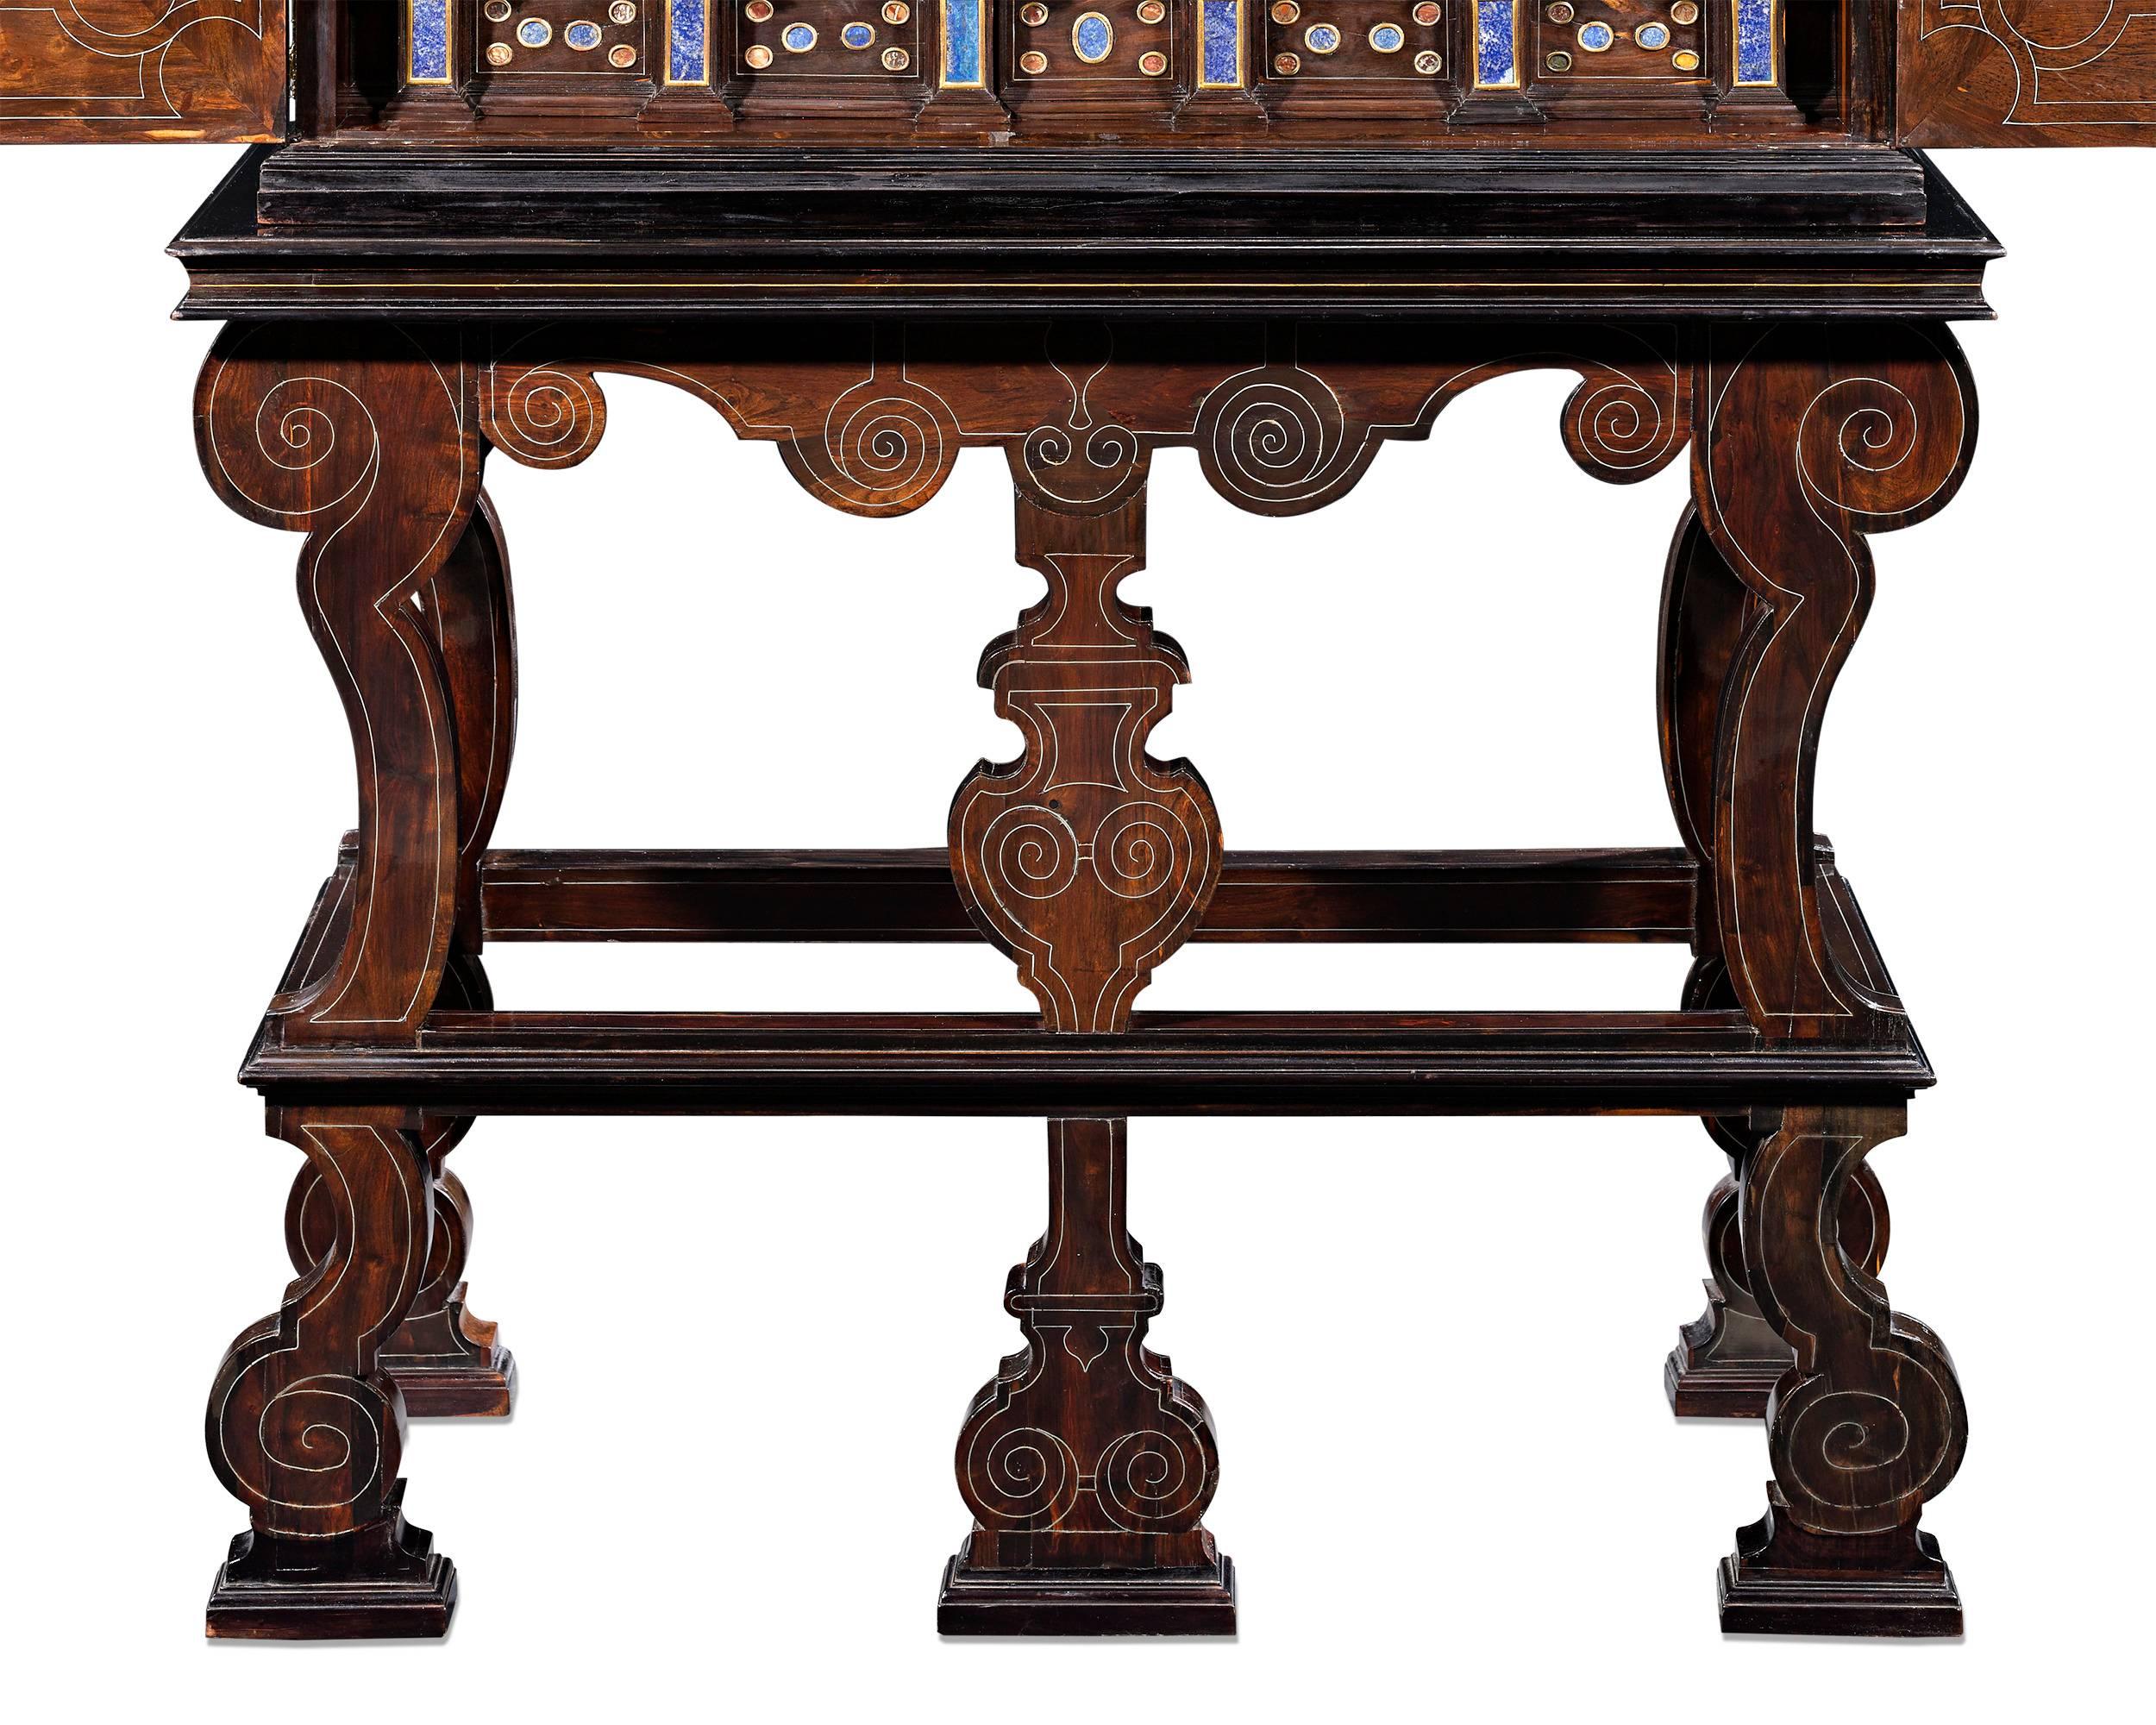 Renaissance 17th Century Cabinet of Curiosities